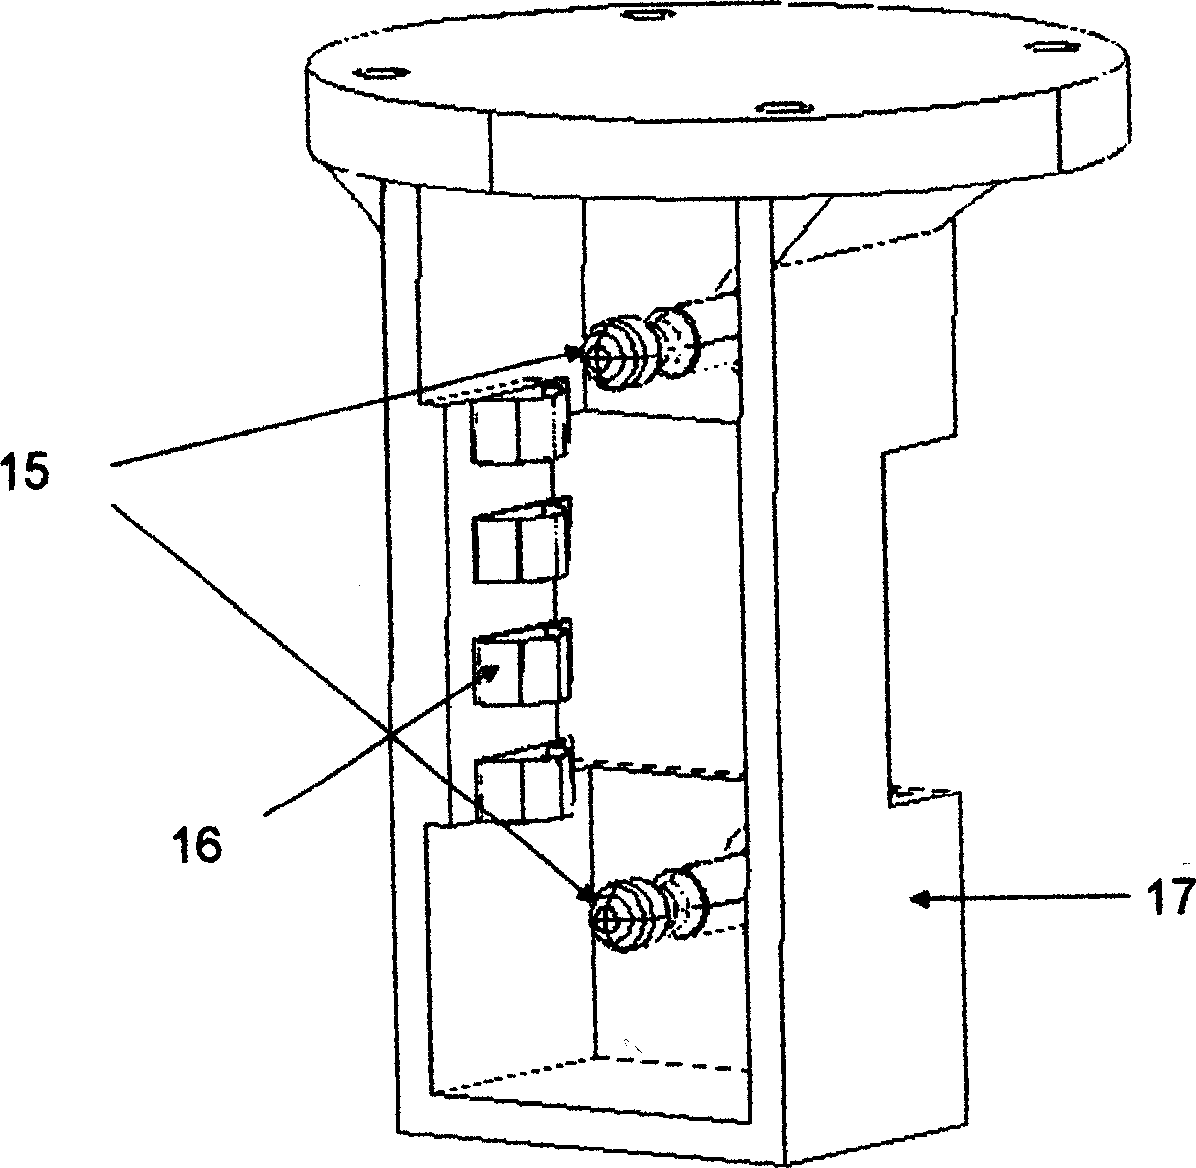 Super high vacuum system sample feeding apparatus